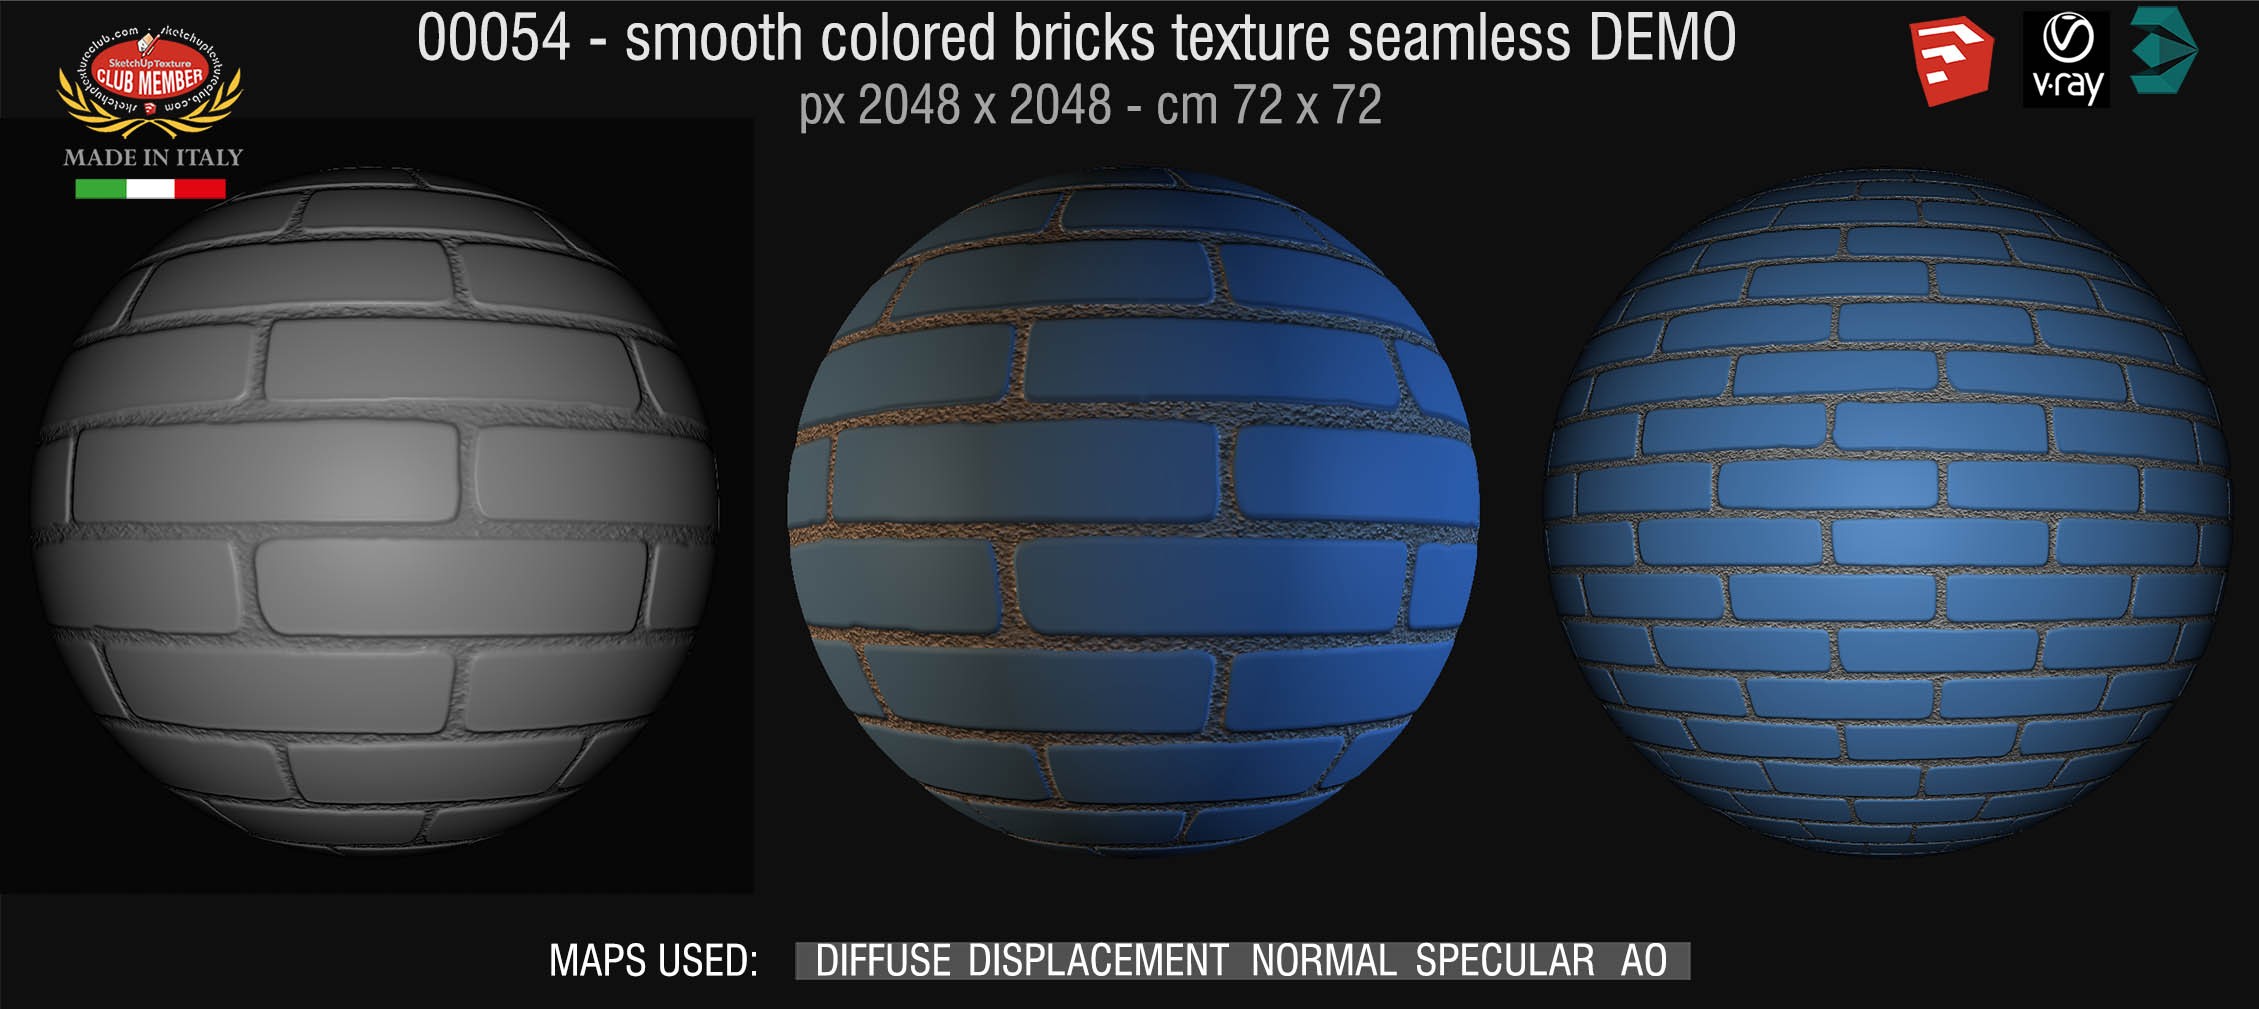 00054 smooth colored bricks texture seamless + maps DEMO